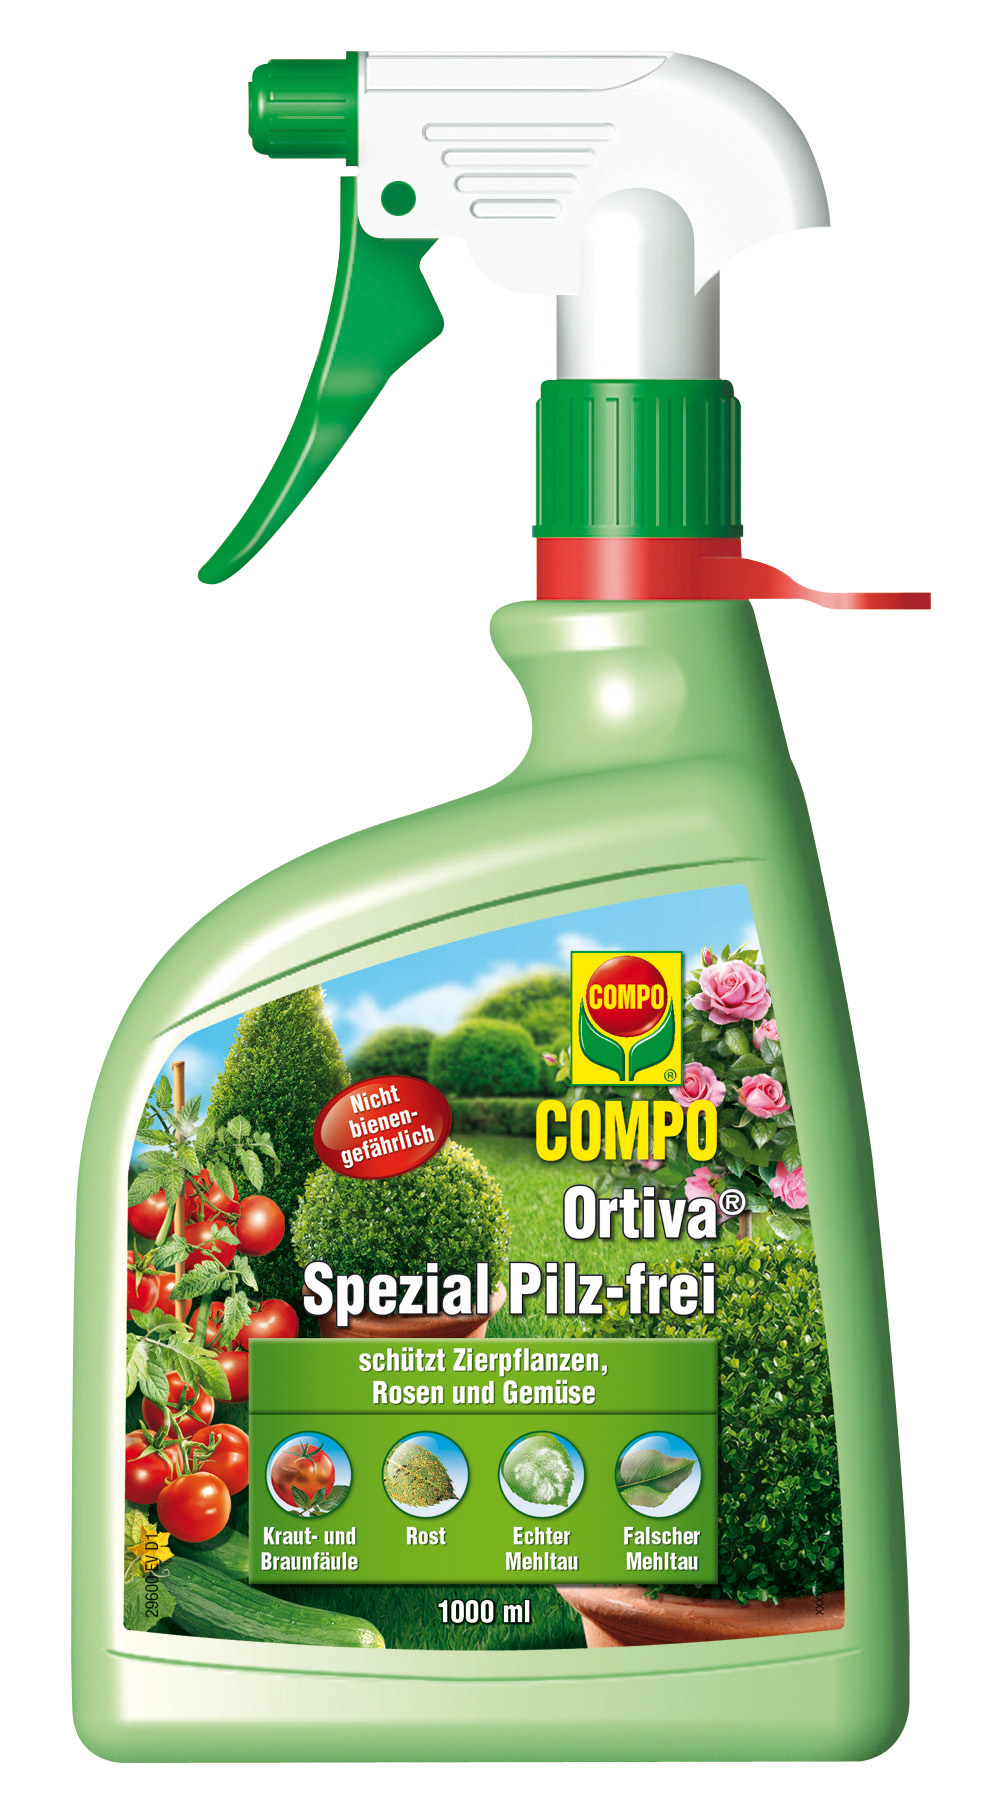 COMPO Ortiva Spezial Pilz-frei AF (1000 ml)